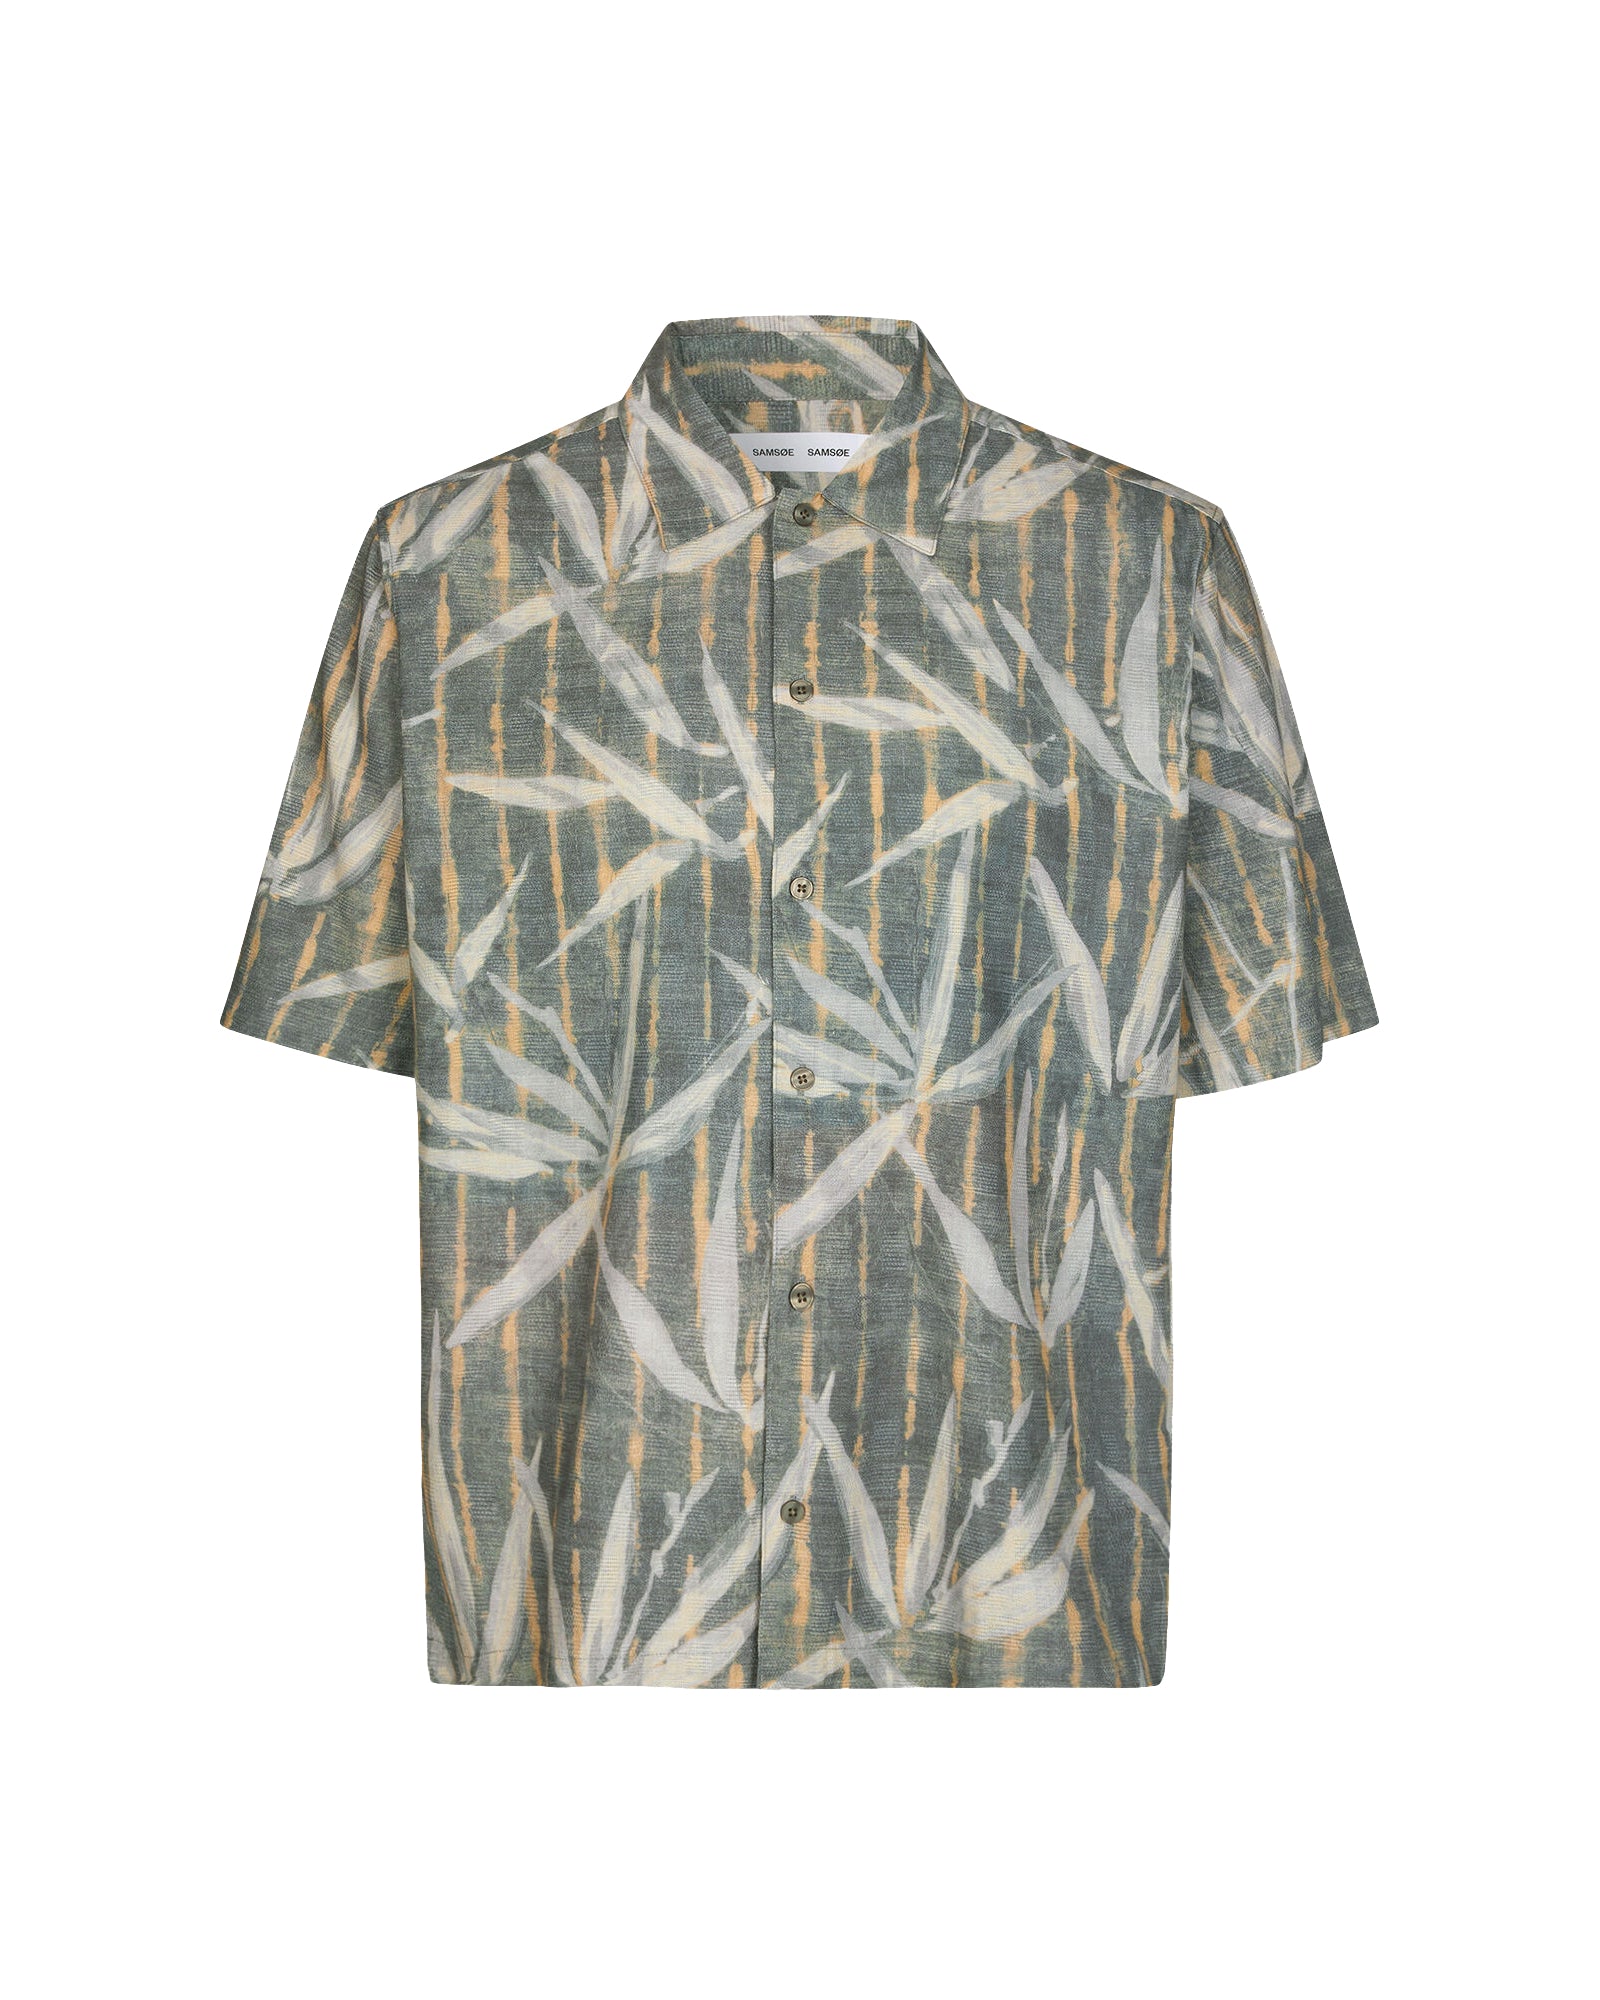 Saayo X 15142 Shirt - Blurred Palms